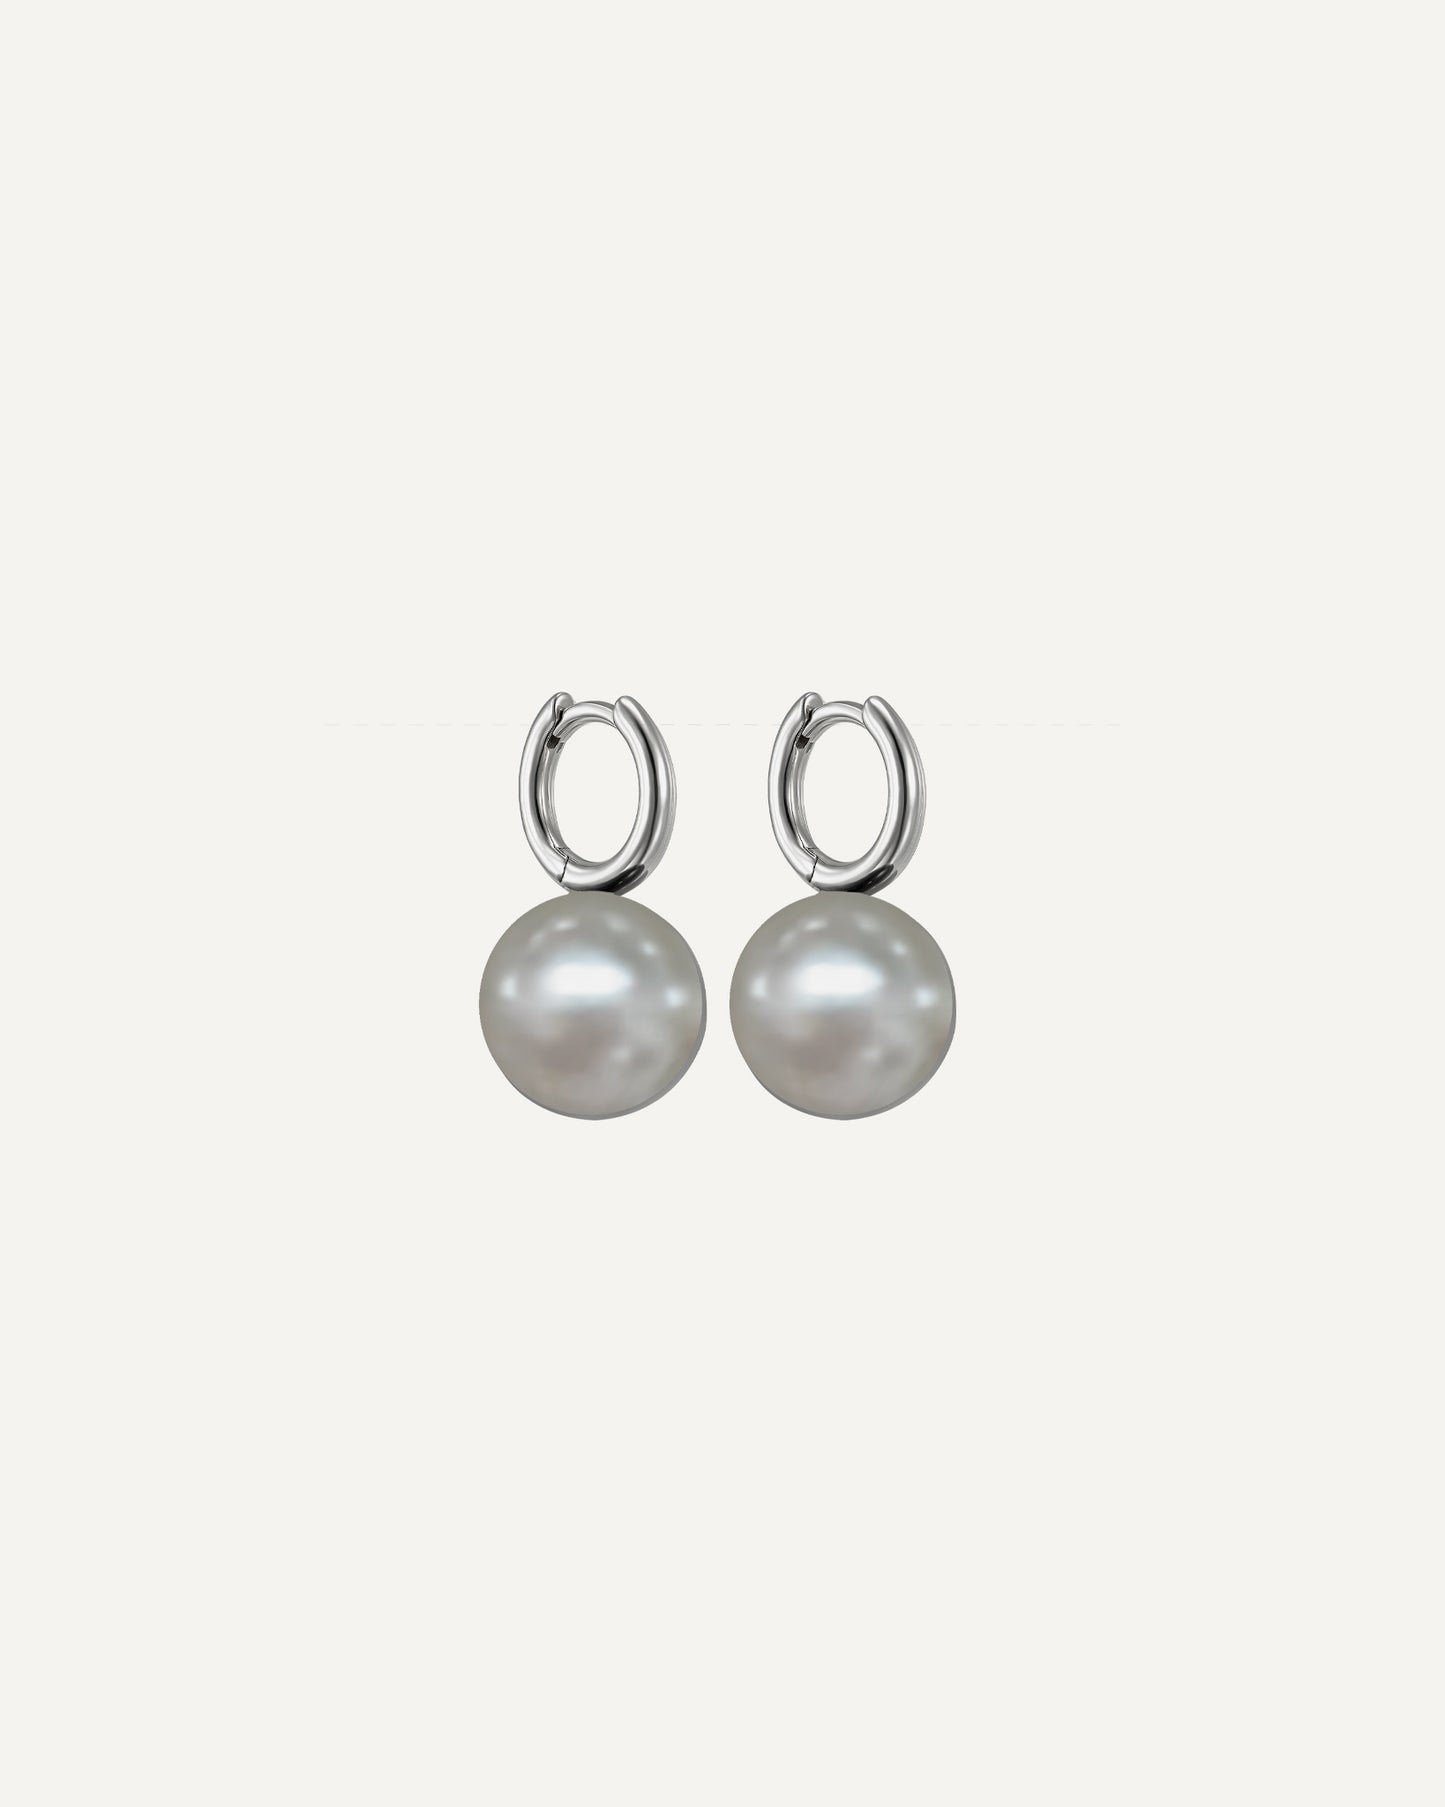 Pearl Balance earrings